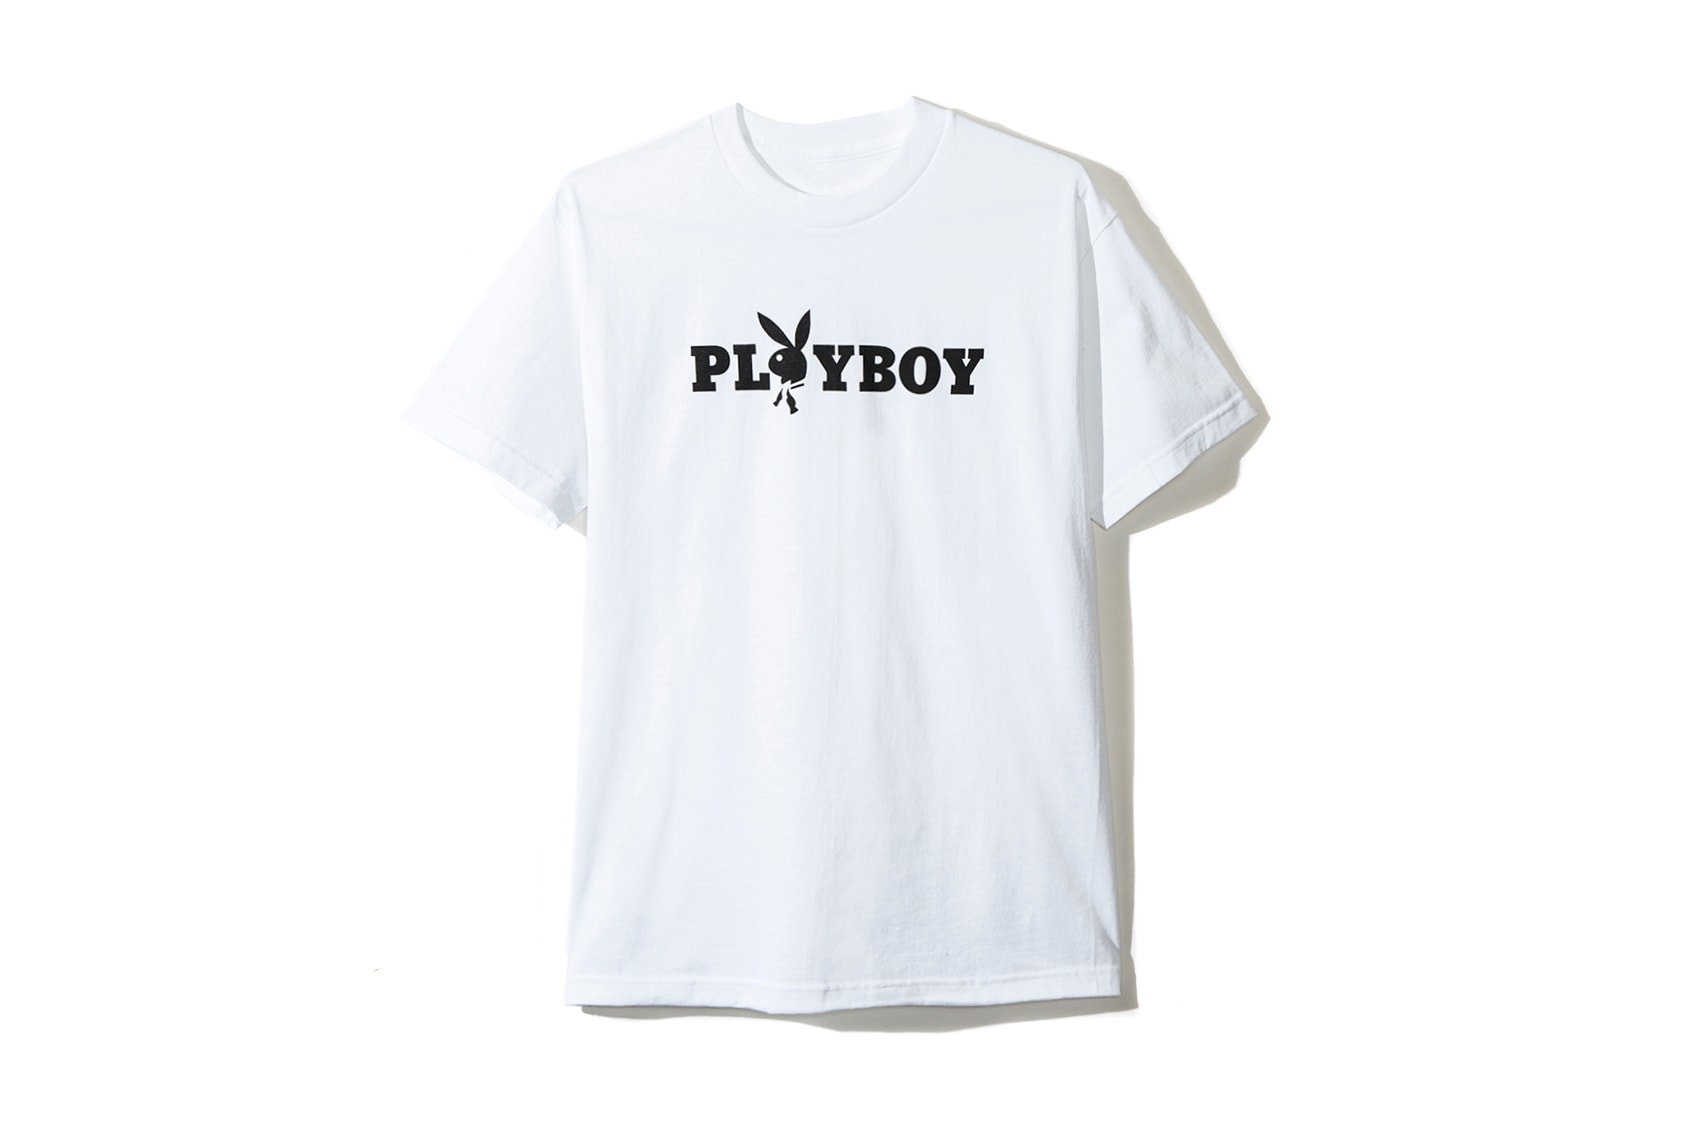 playboy white label anti social social club collaboration collection july 13 2018 rabbit head bunny branding logo white tee shirt